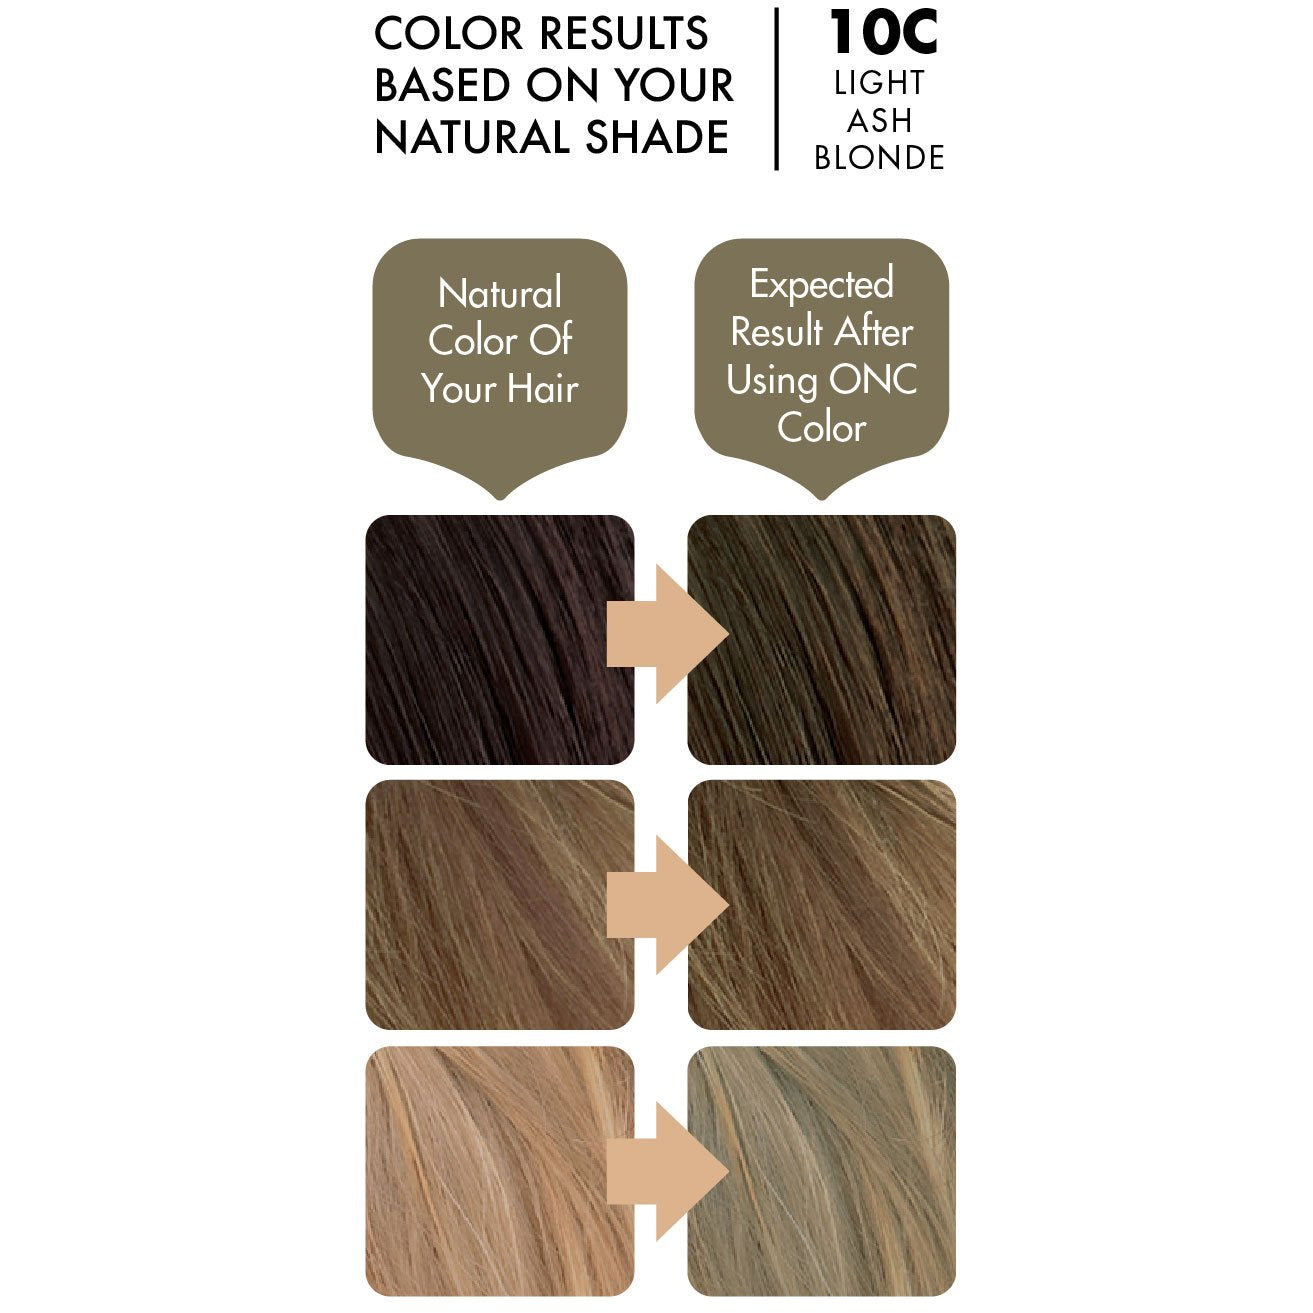 10C Light Ash Blonde Heat Activated Hair Dye With Organic Ingredients - 120 ml (4 fl. oz)